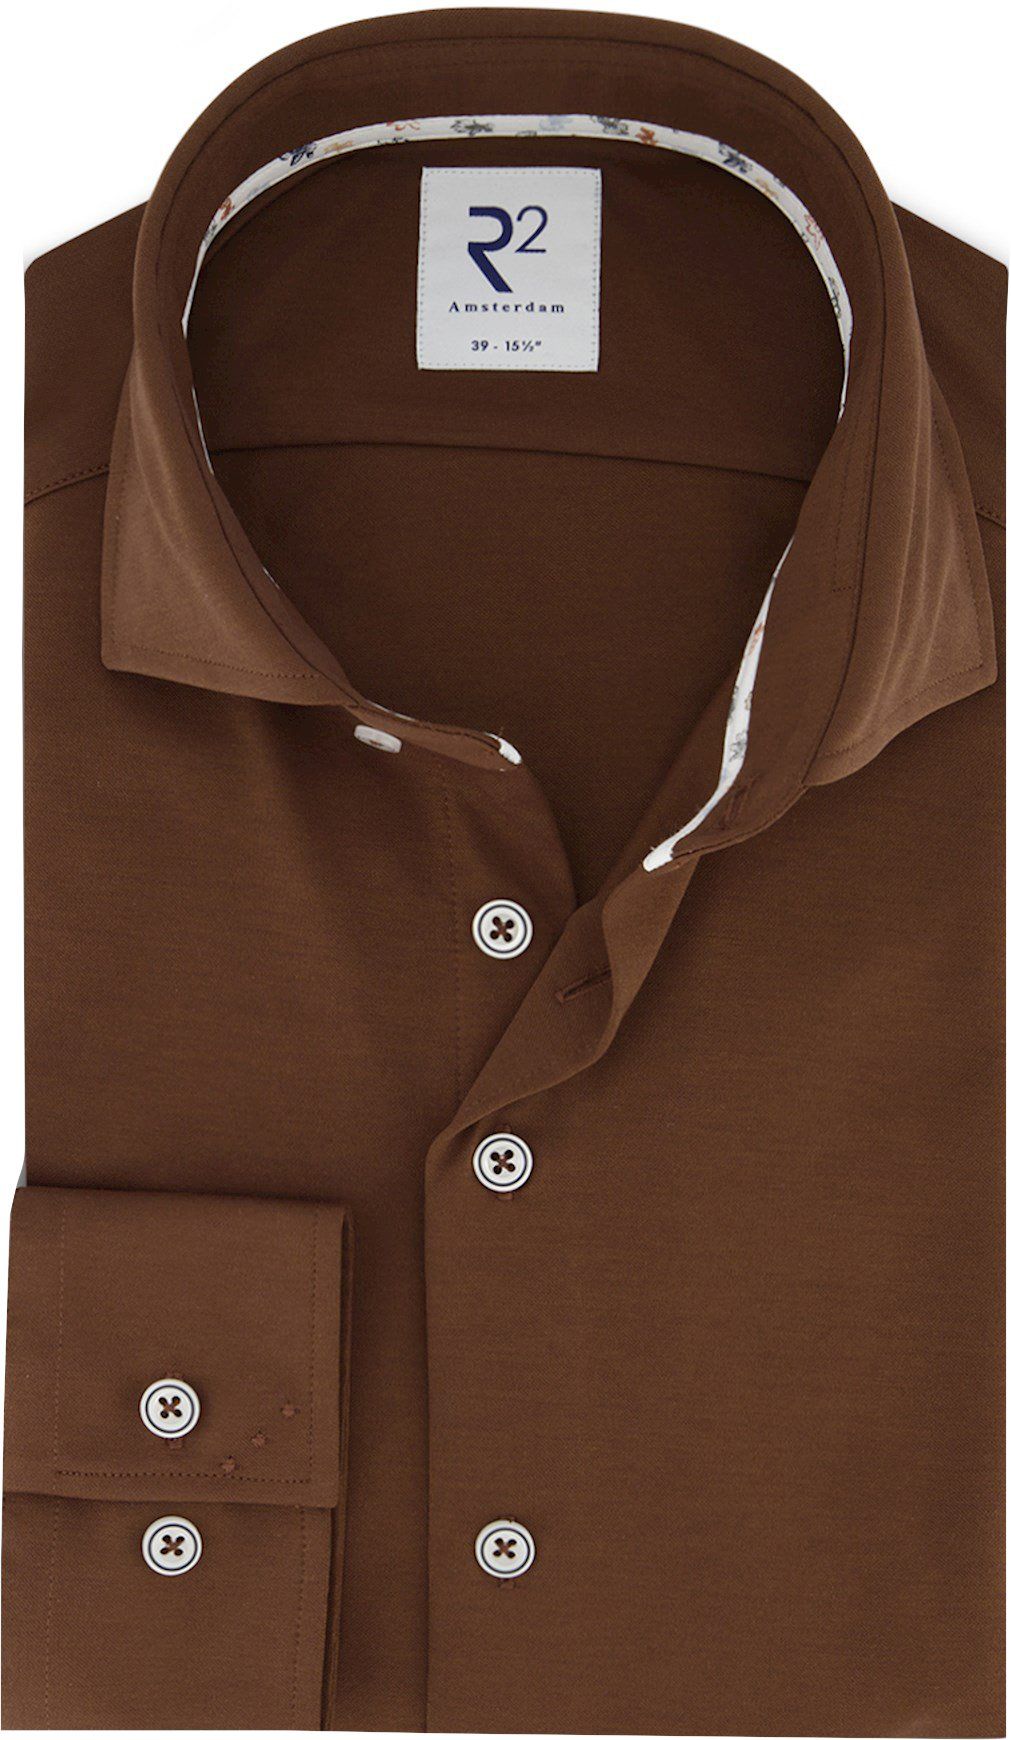 R2 Shirt Widespread Brown size 14.5